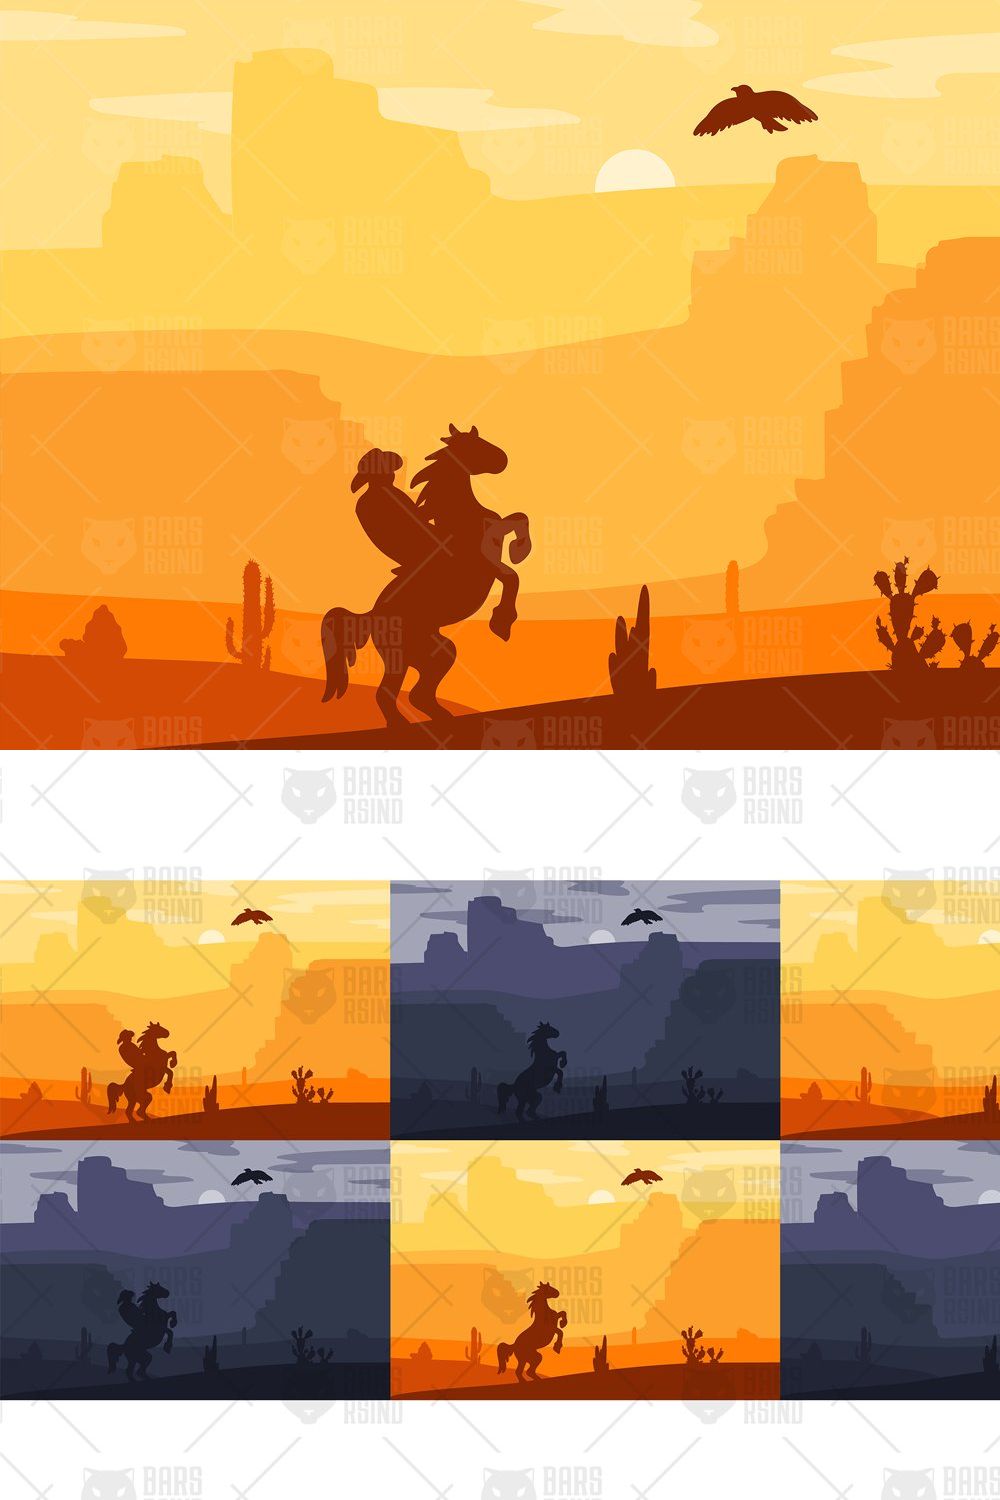 Retro Wild West Hero On Horse pinterest preview image.